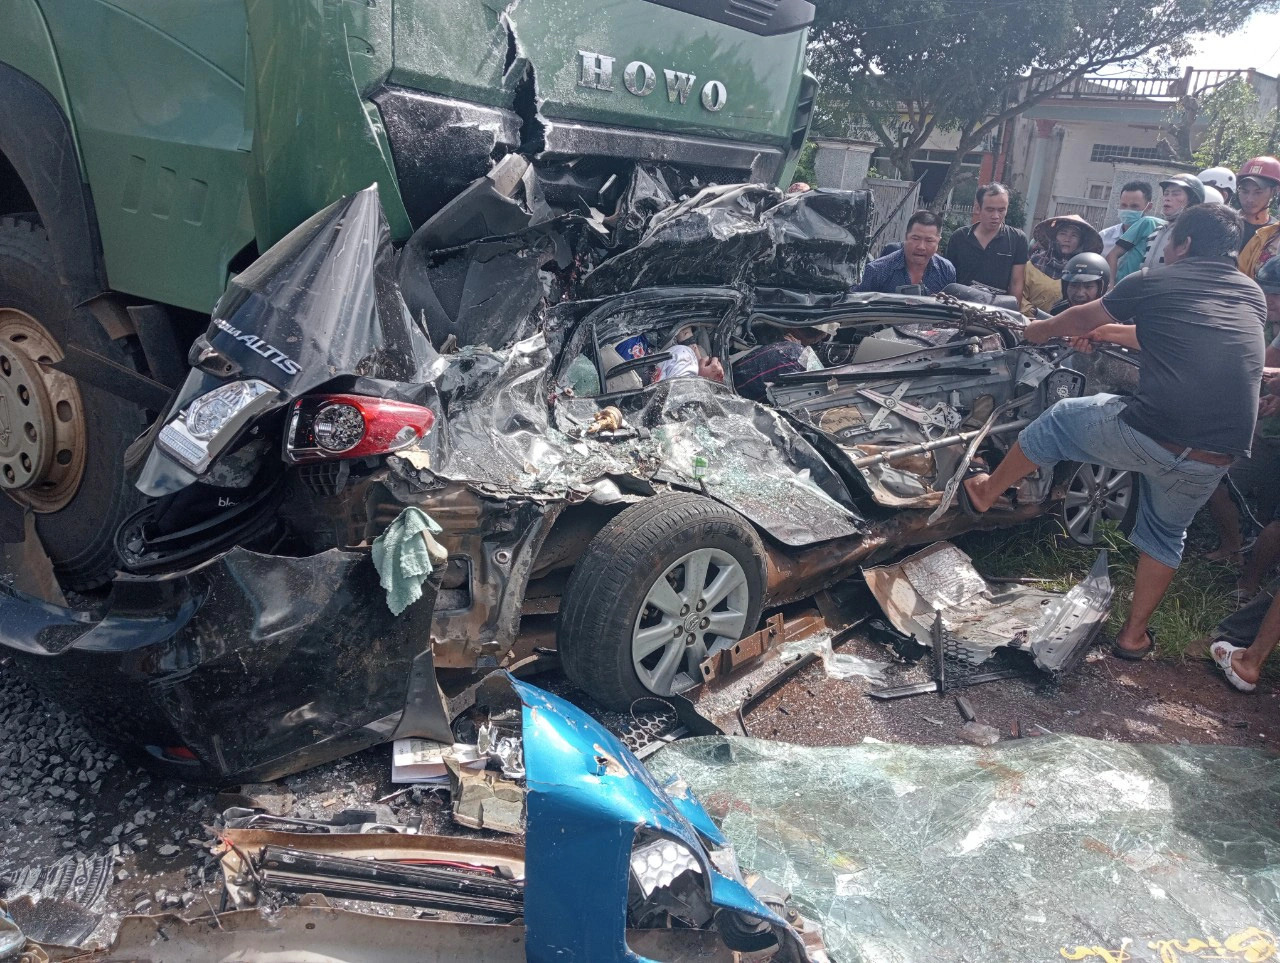 The car was severely damaged in the crash. Photo: Le Hoa / Tuoi Tre